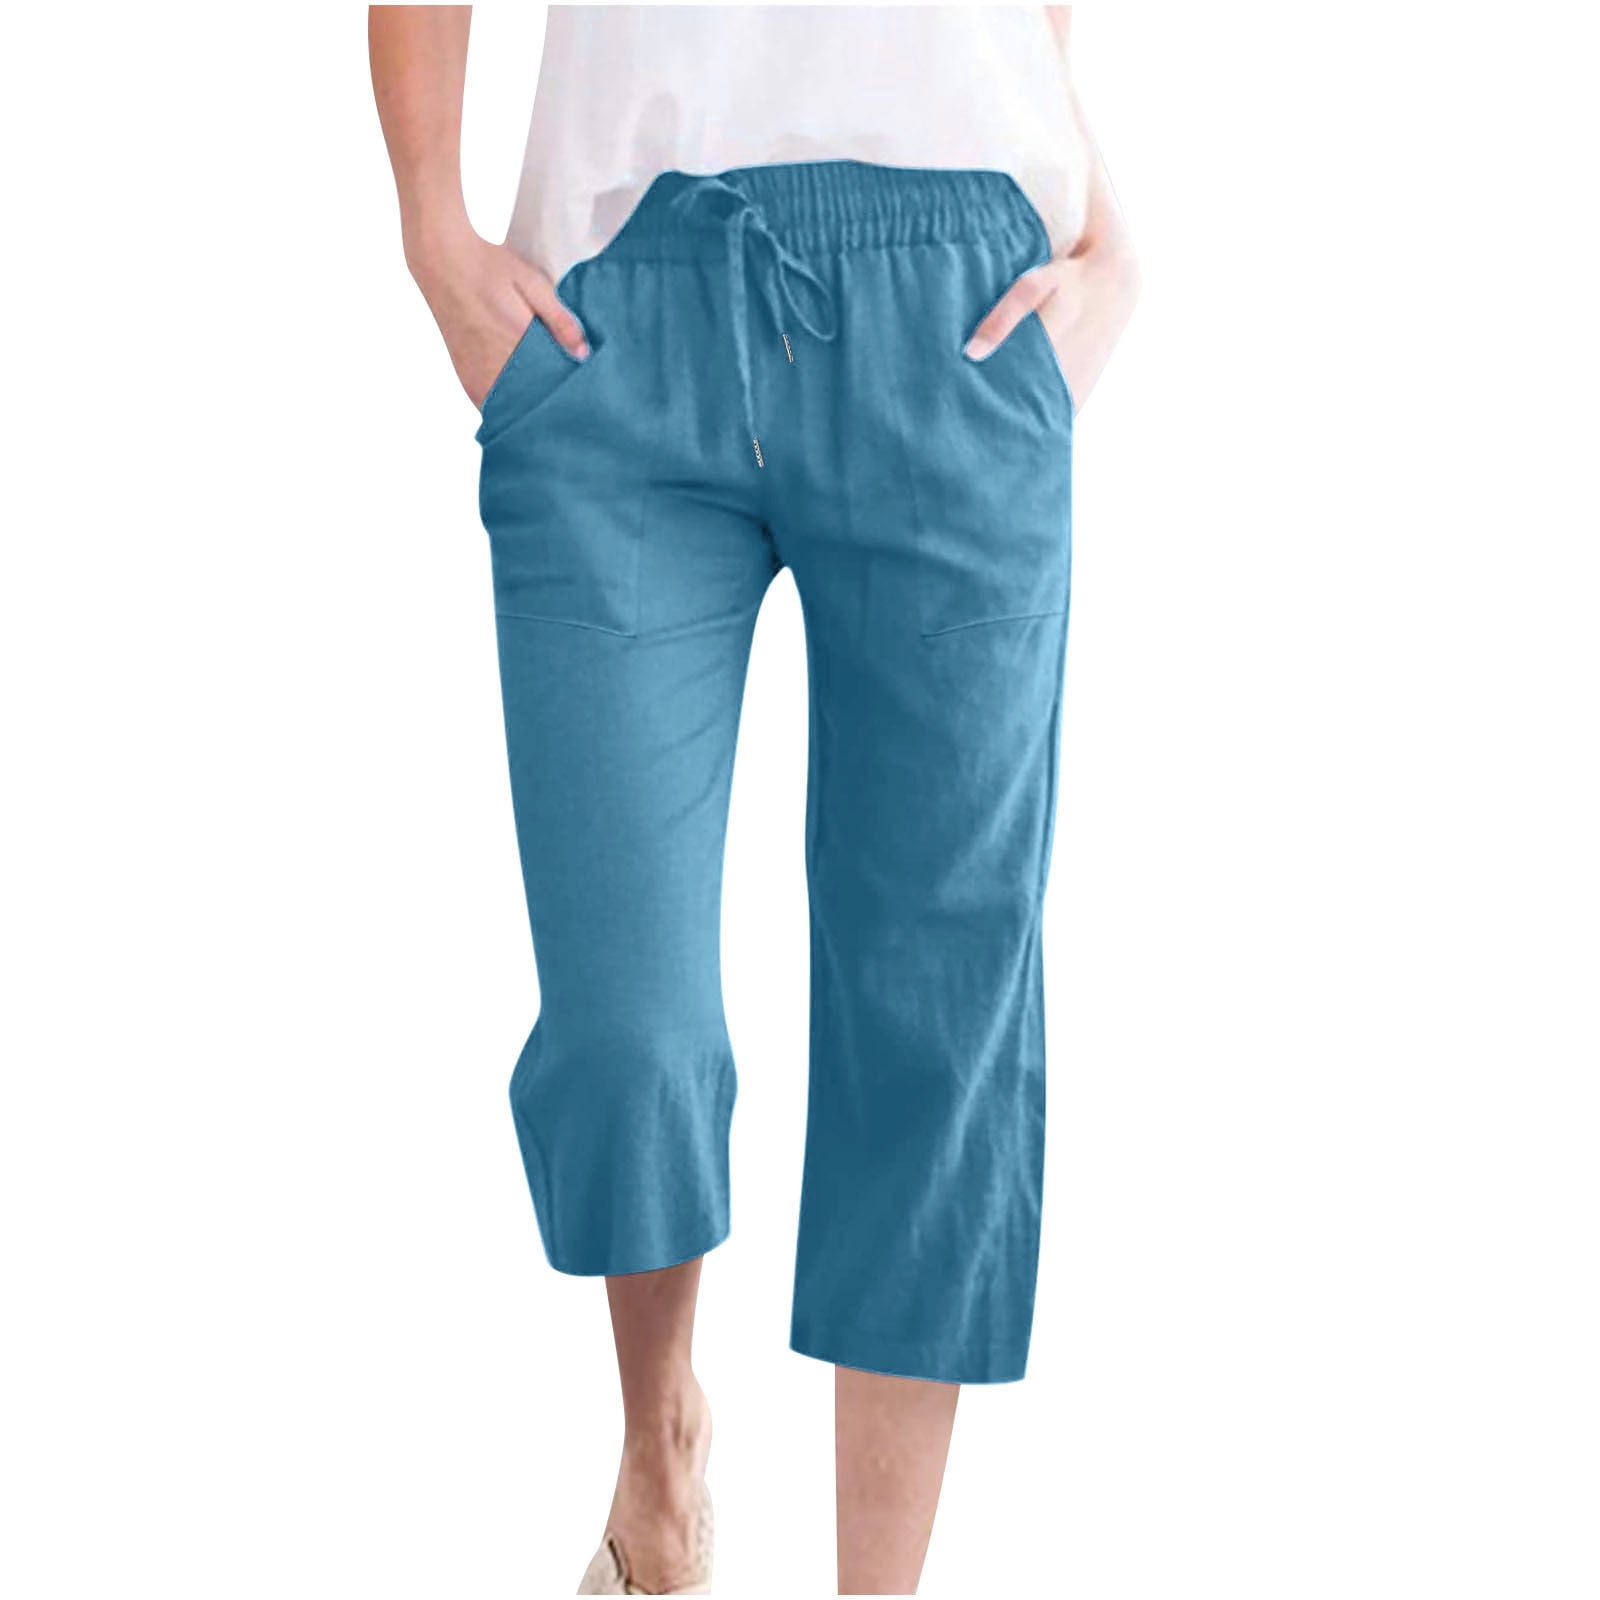 Dyegold Capris For Women Casual Summer Cotton Linen Cropped Pants ...